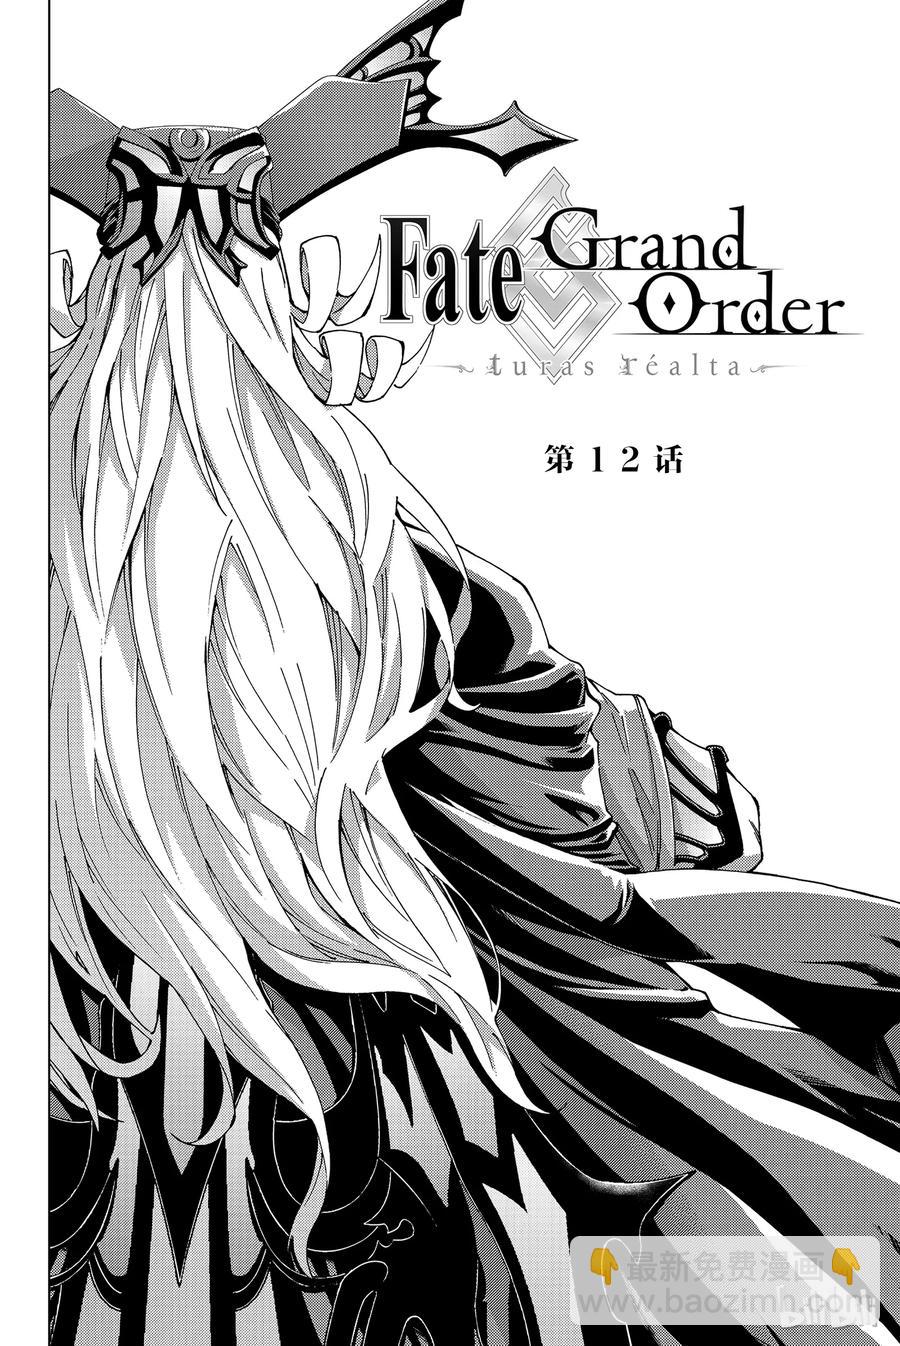 Fate/Grand Order-turas realta- - 12 使人民，感到幸福 - 2